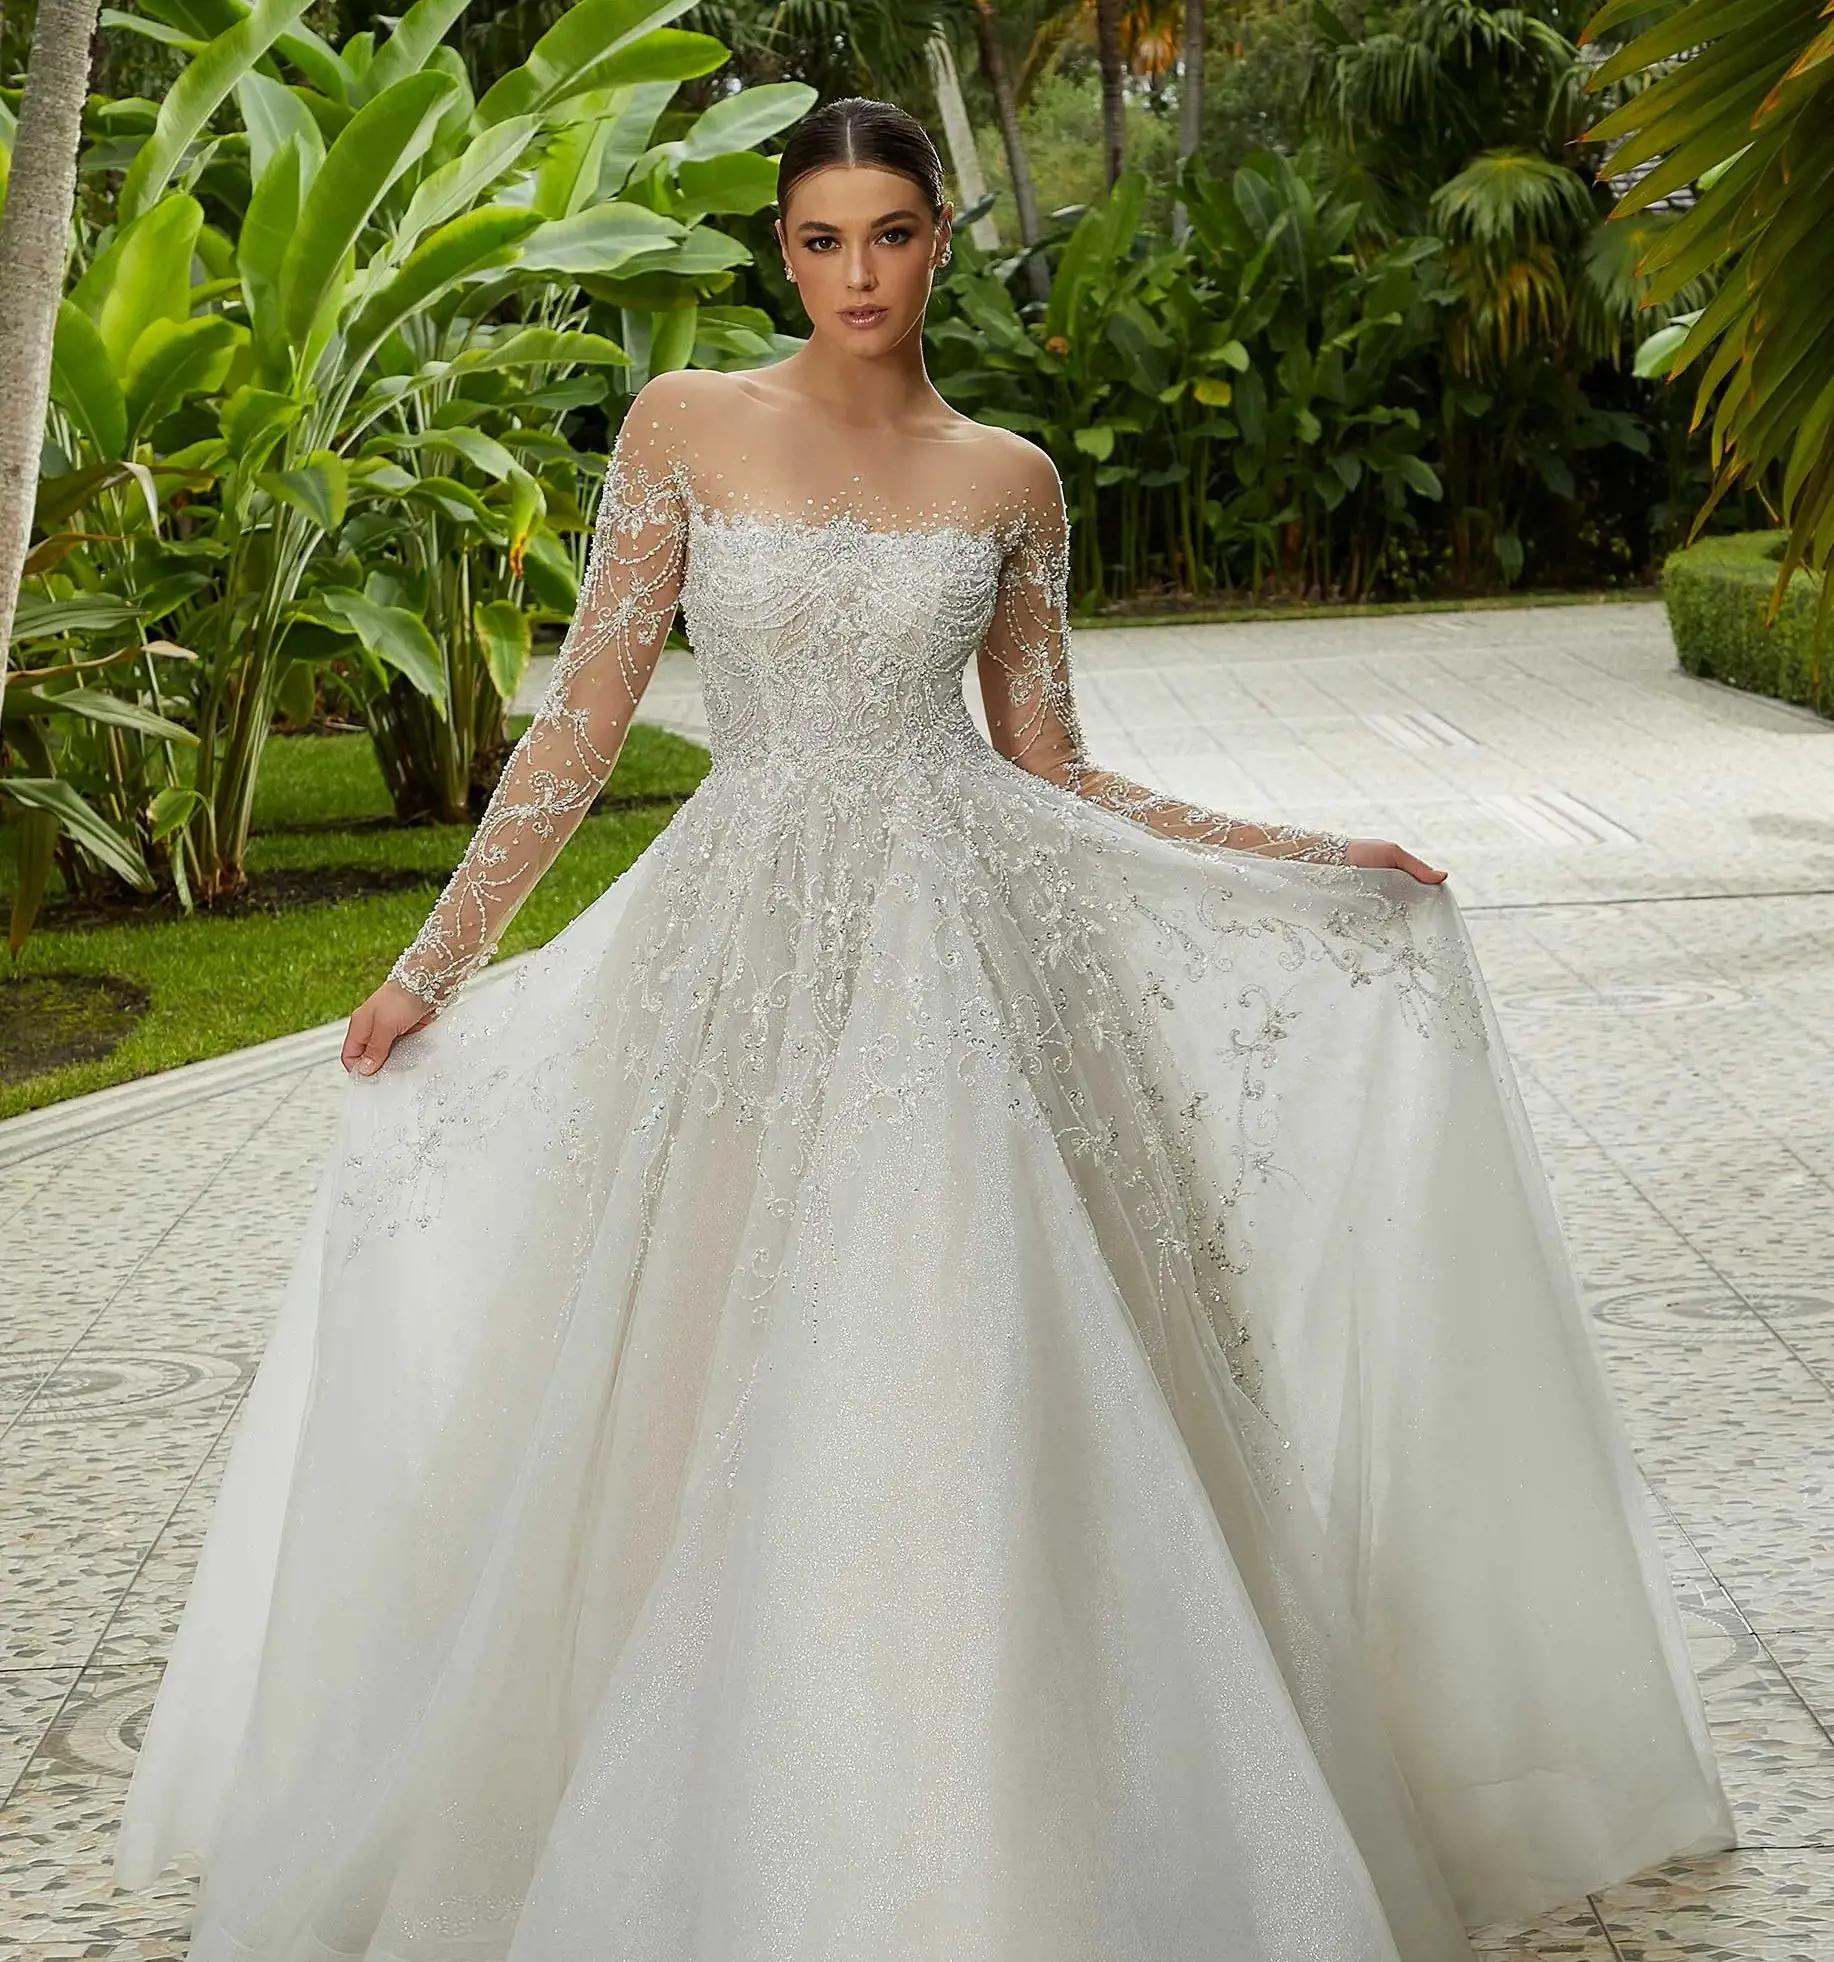 Wedding Dresses That Will Make You Feel Like a Princess!! Image